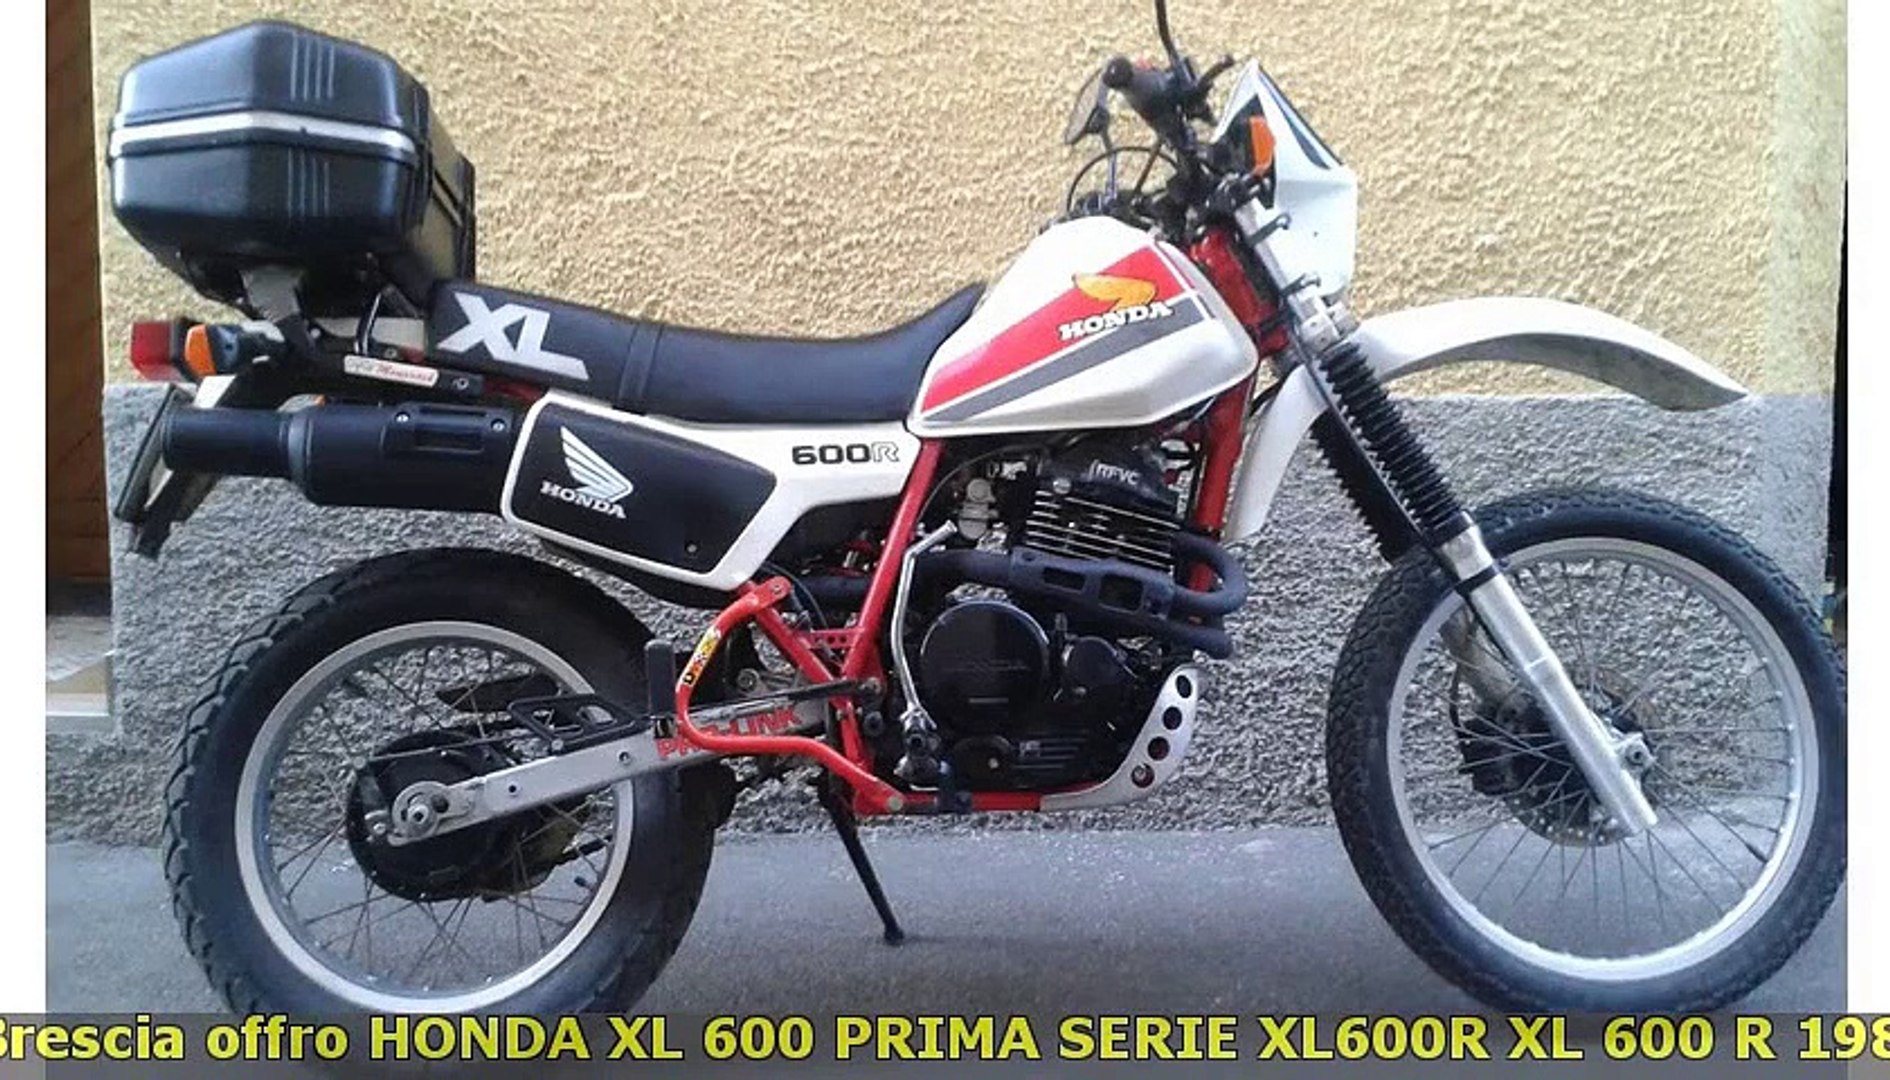 HONDA XL 600 PRIMA SERIE XL600R XL... - Video Dailymotion